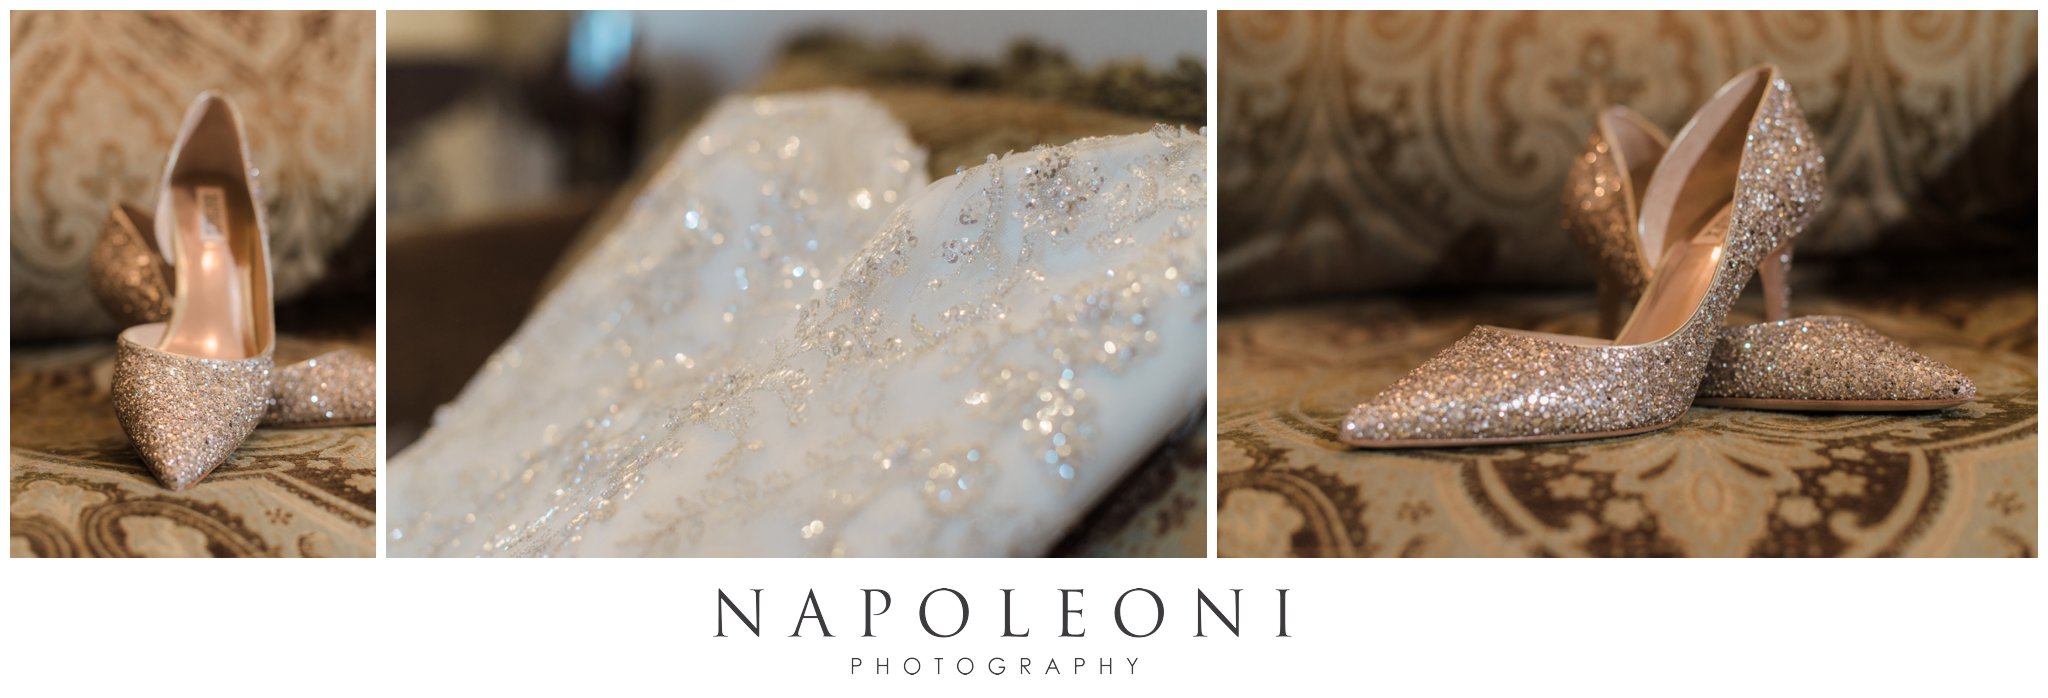 napoleoni-photography_0228